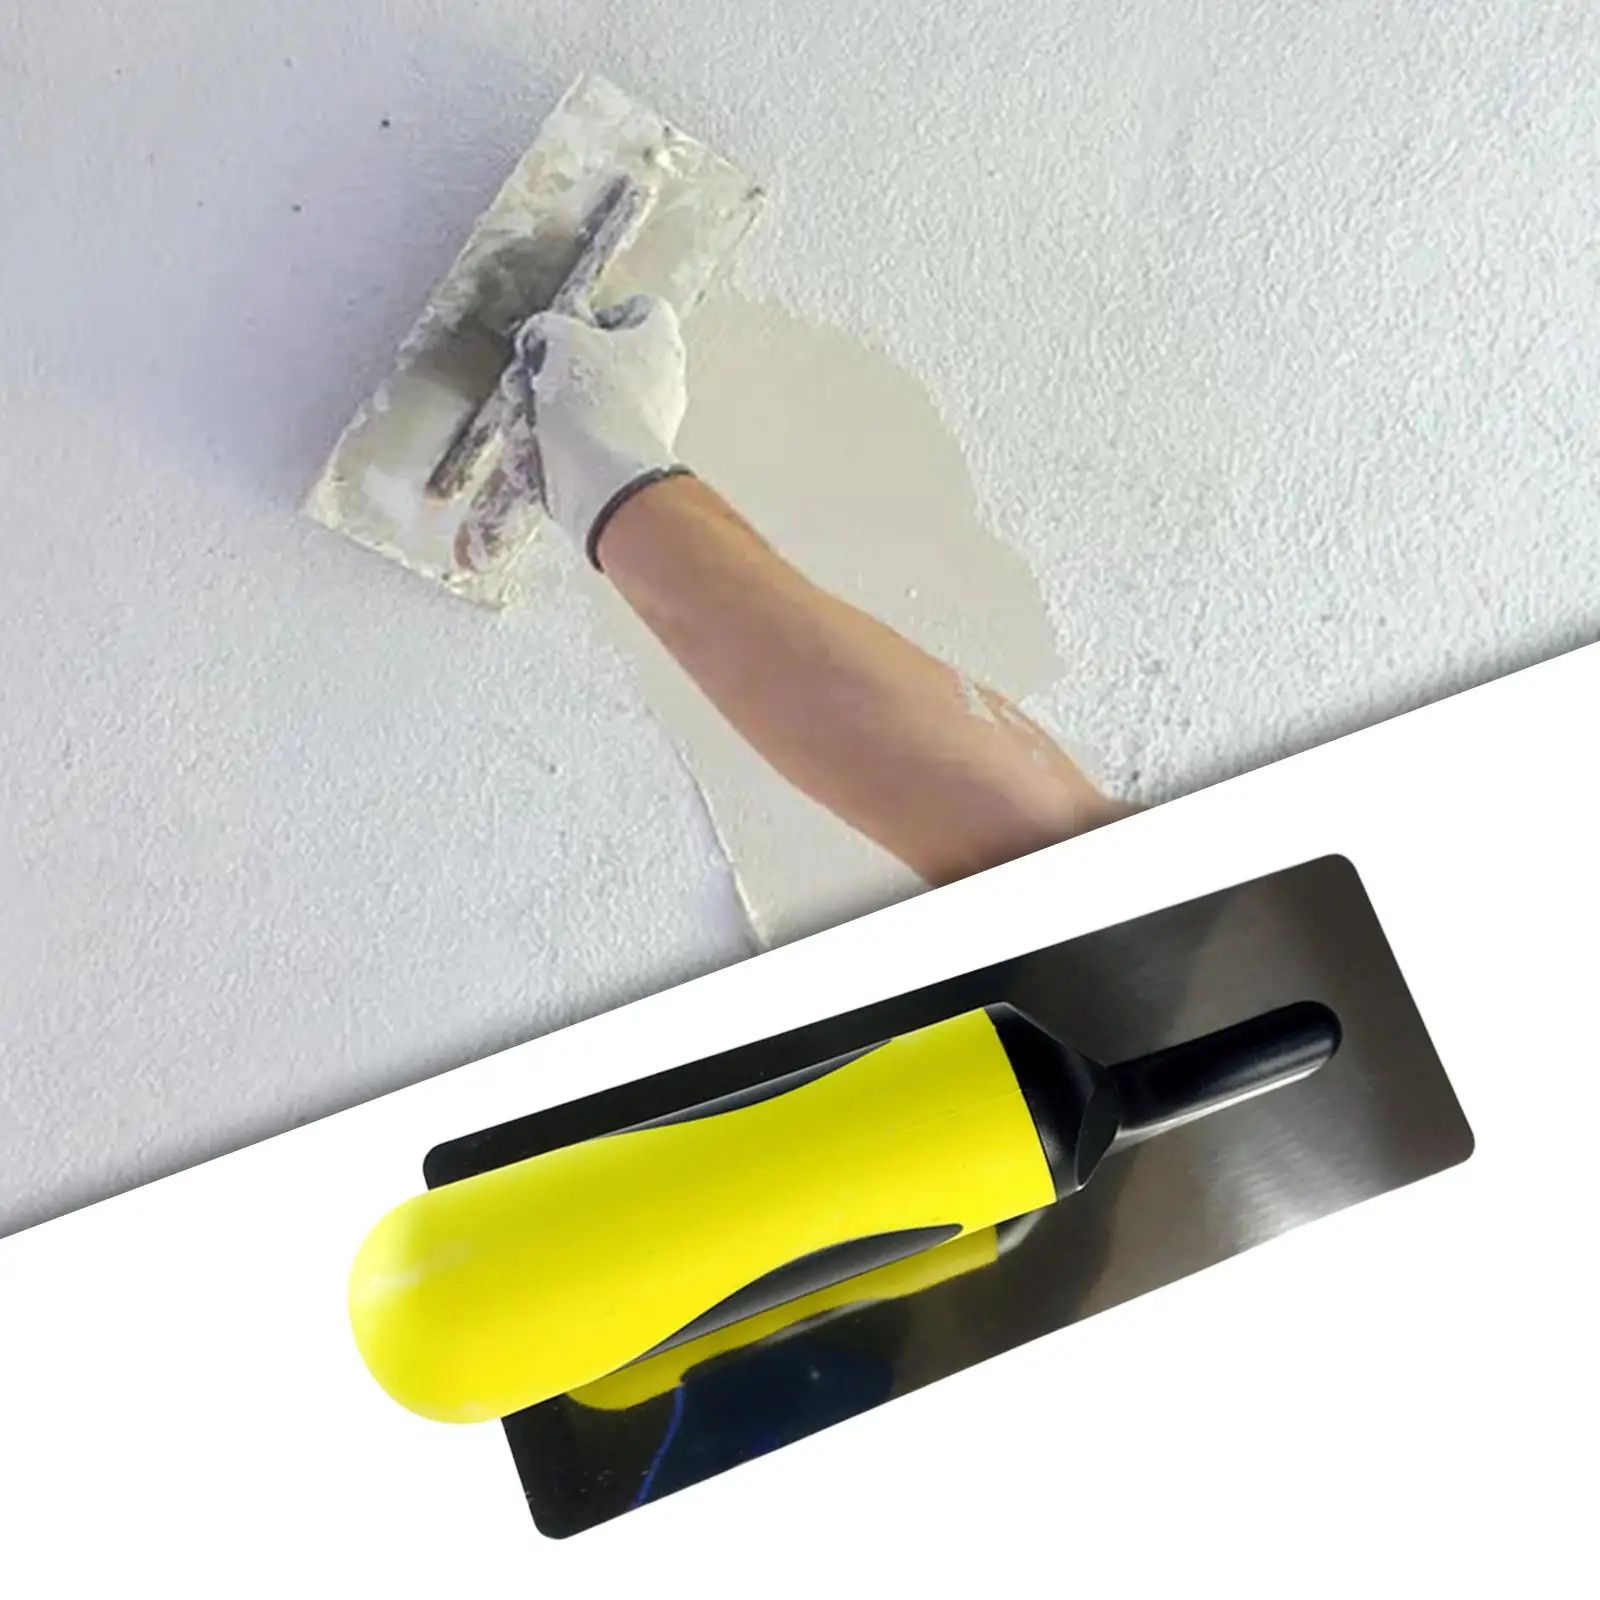 Finisher Plastering Trowel Household Knife Scraper for Removing Wallpaper Cement Repairing Drywall Plastering Wall Refinishing